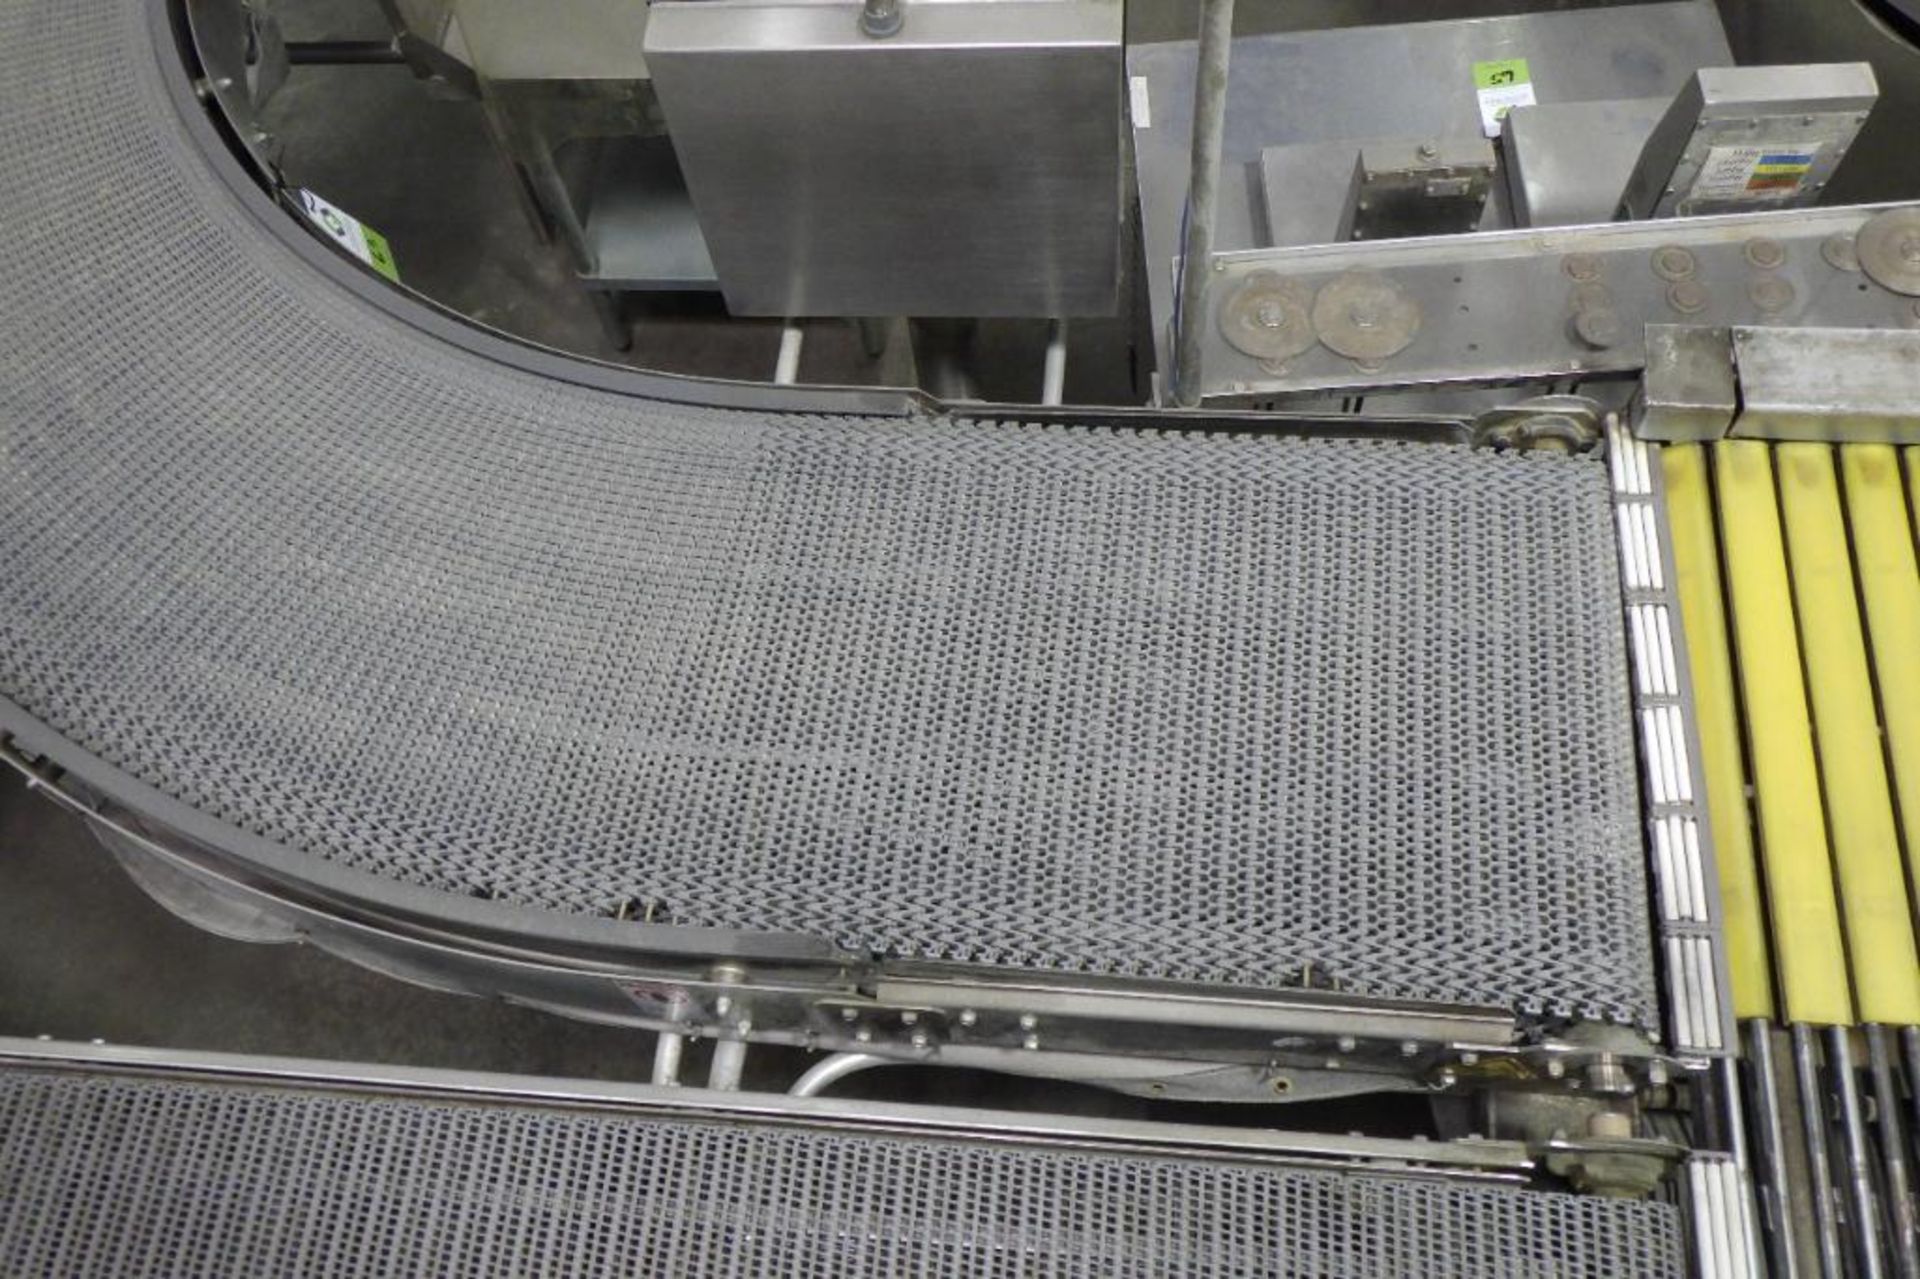 Stewart System 90 degree conveyor - Image 3 of 11